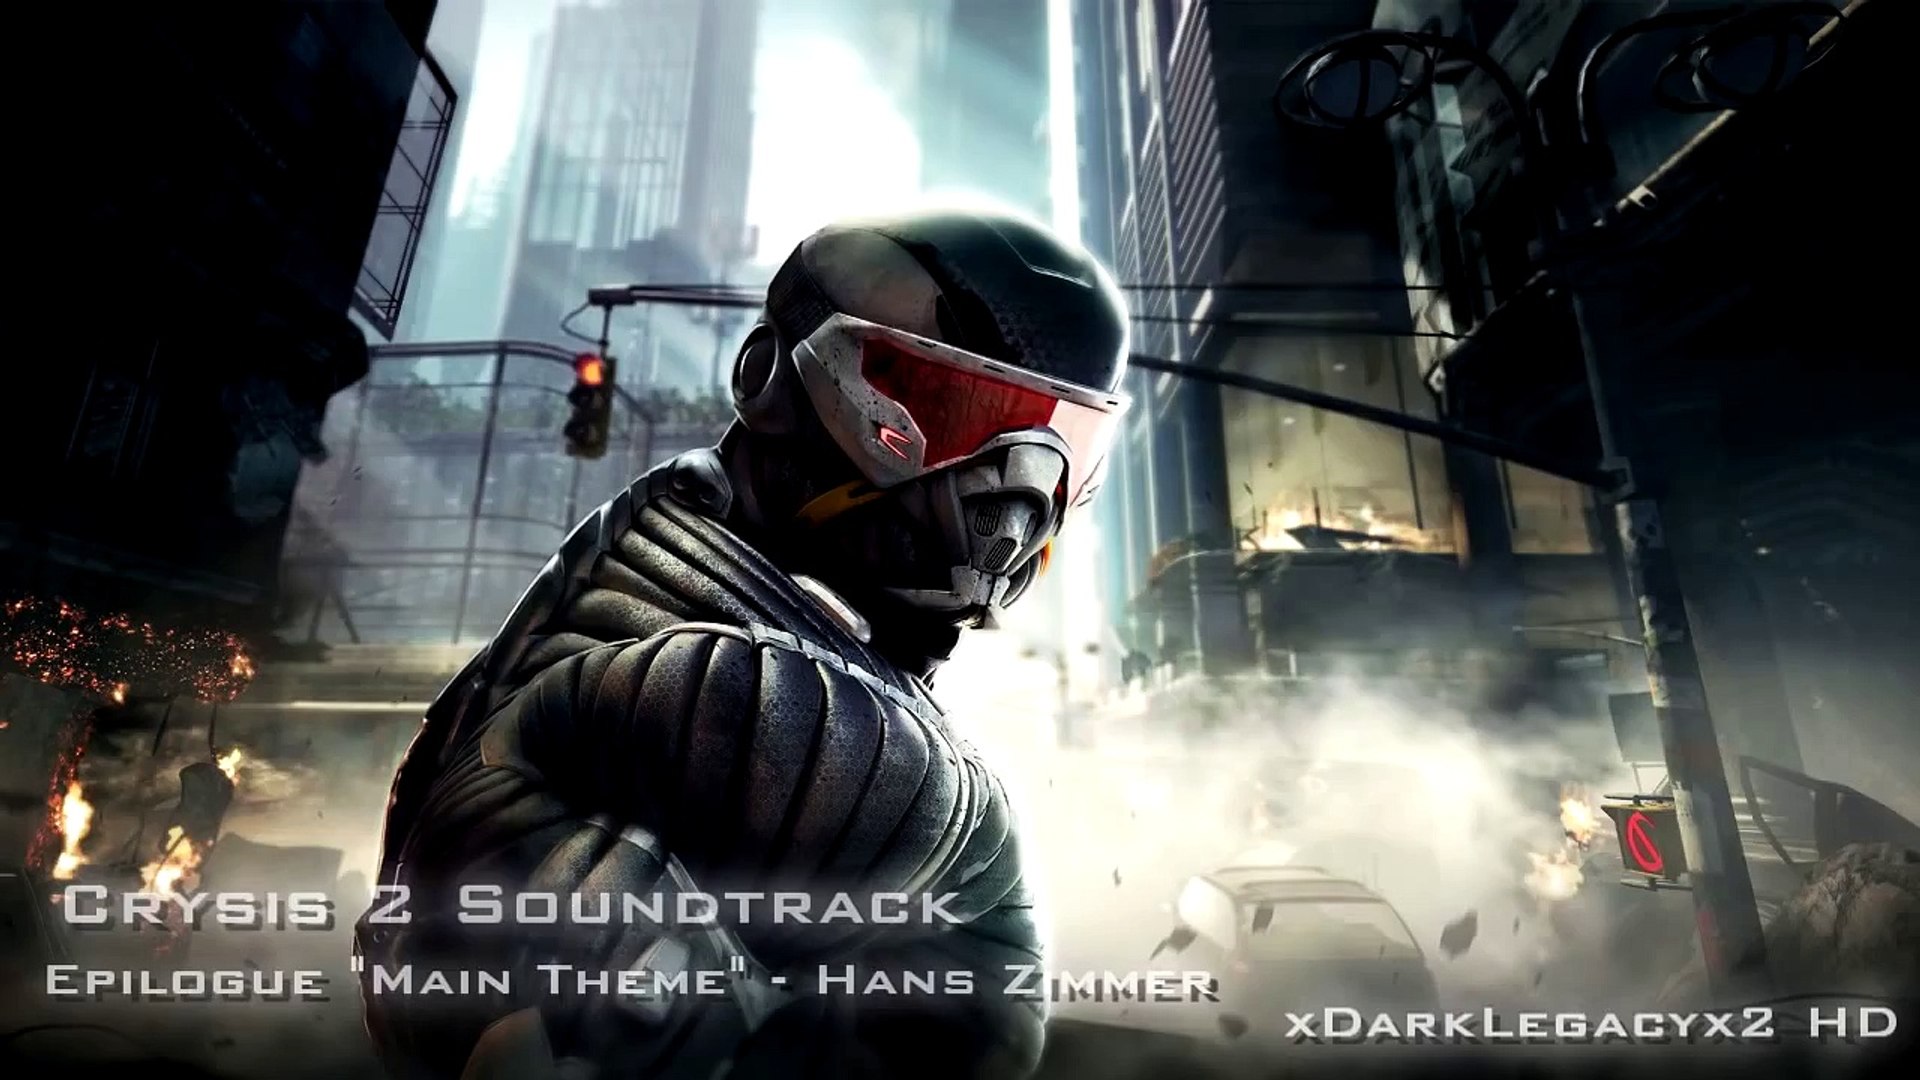 Hans Zimmer - Epilogue "Main Theme" - Crysis 2 Soundtrack - video  Dailymotion